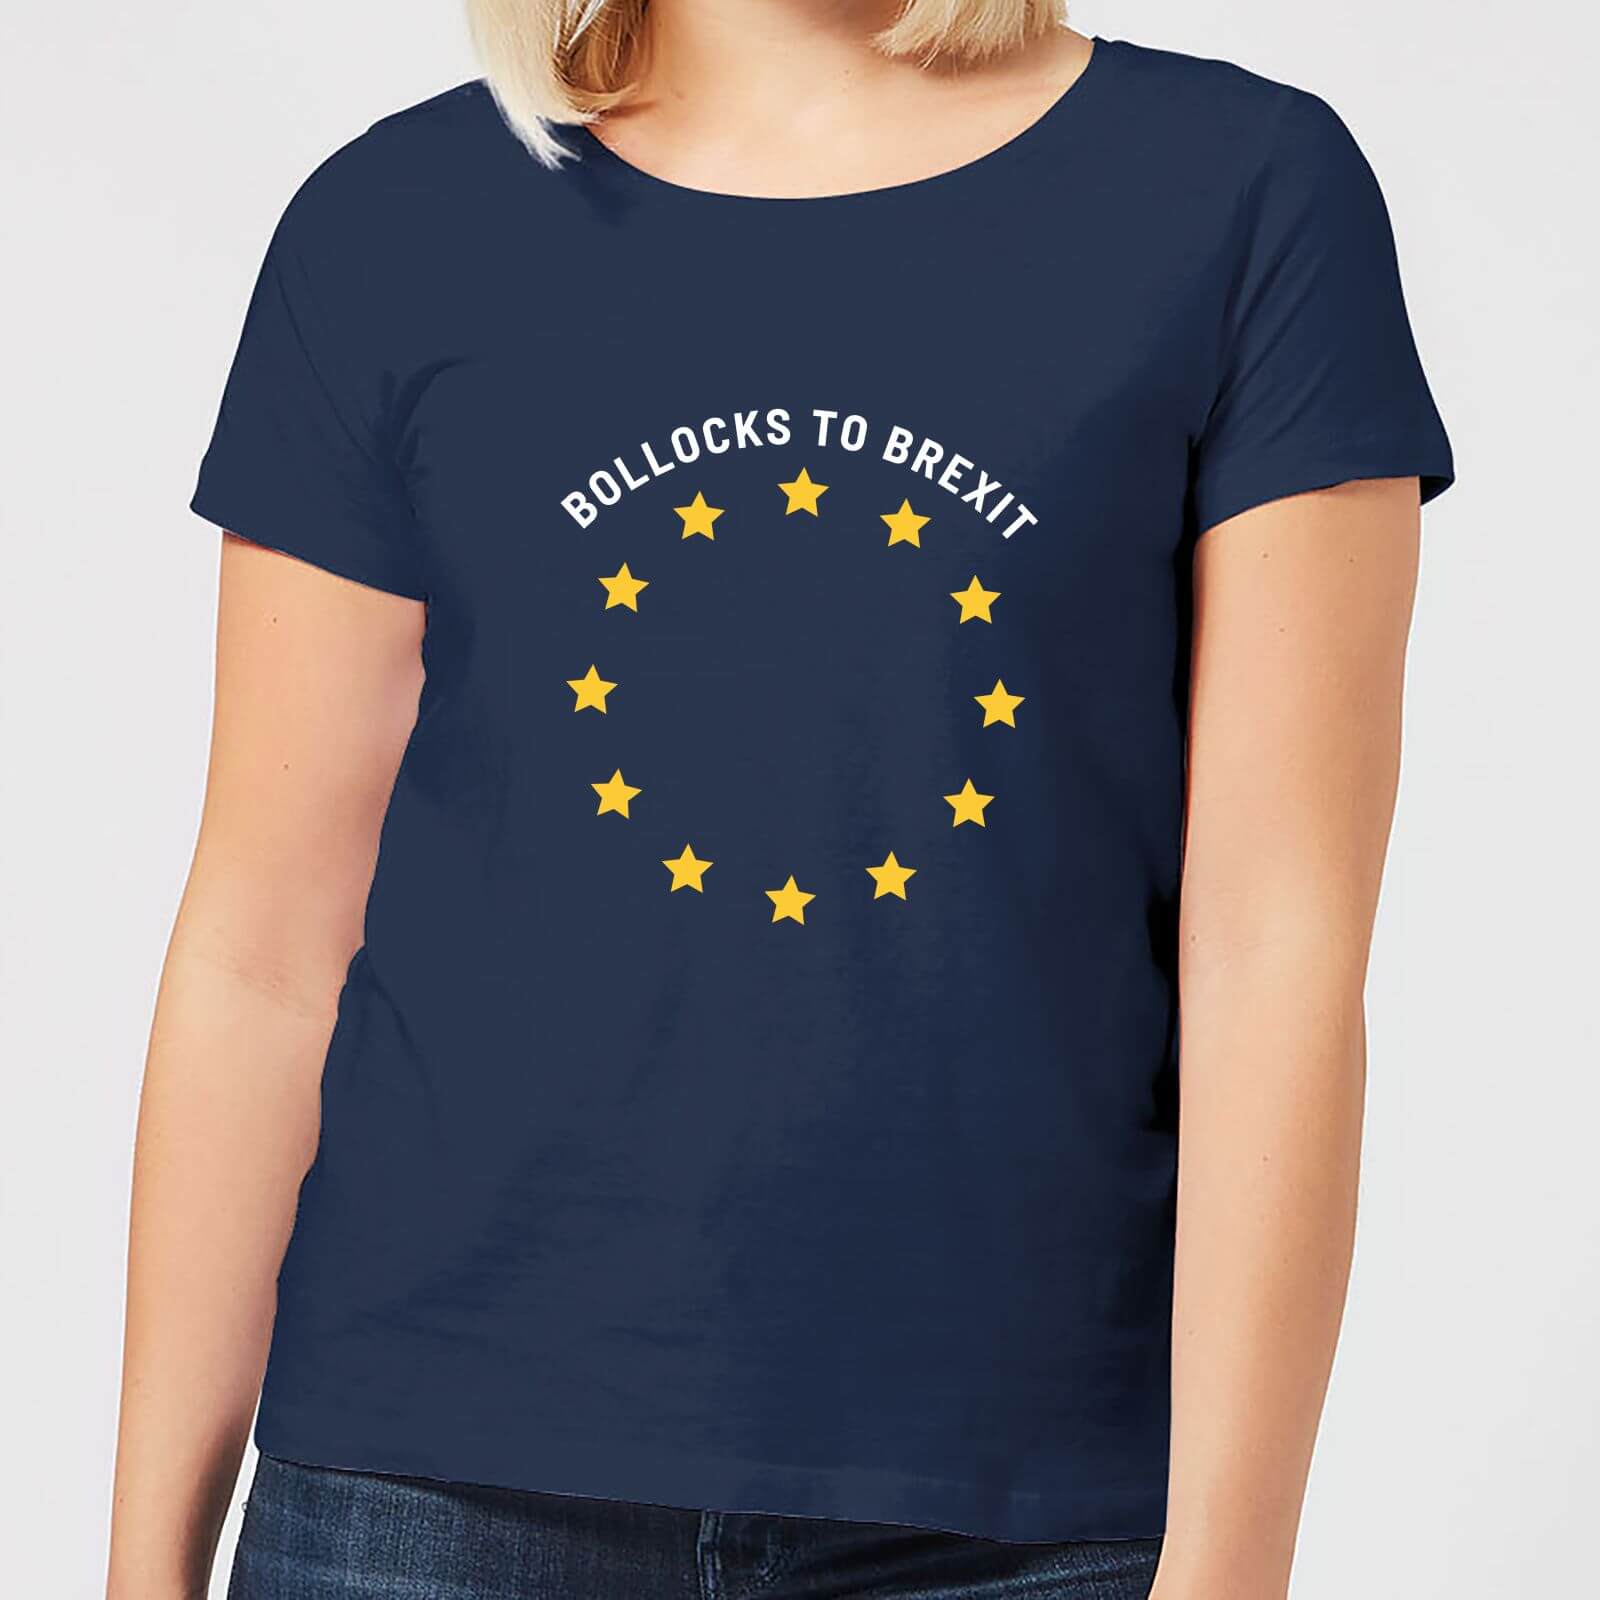 B*llocks To Brexit Women's T-Shirt - Navy - L - Navy